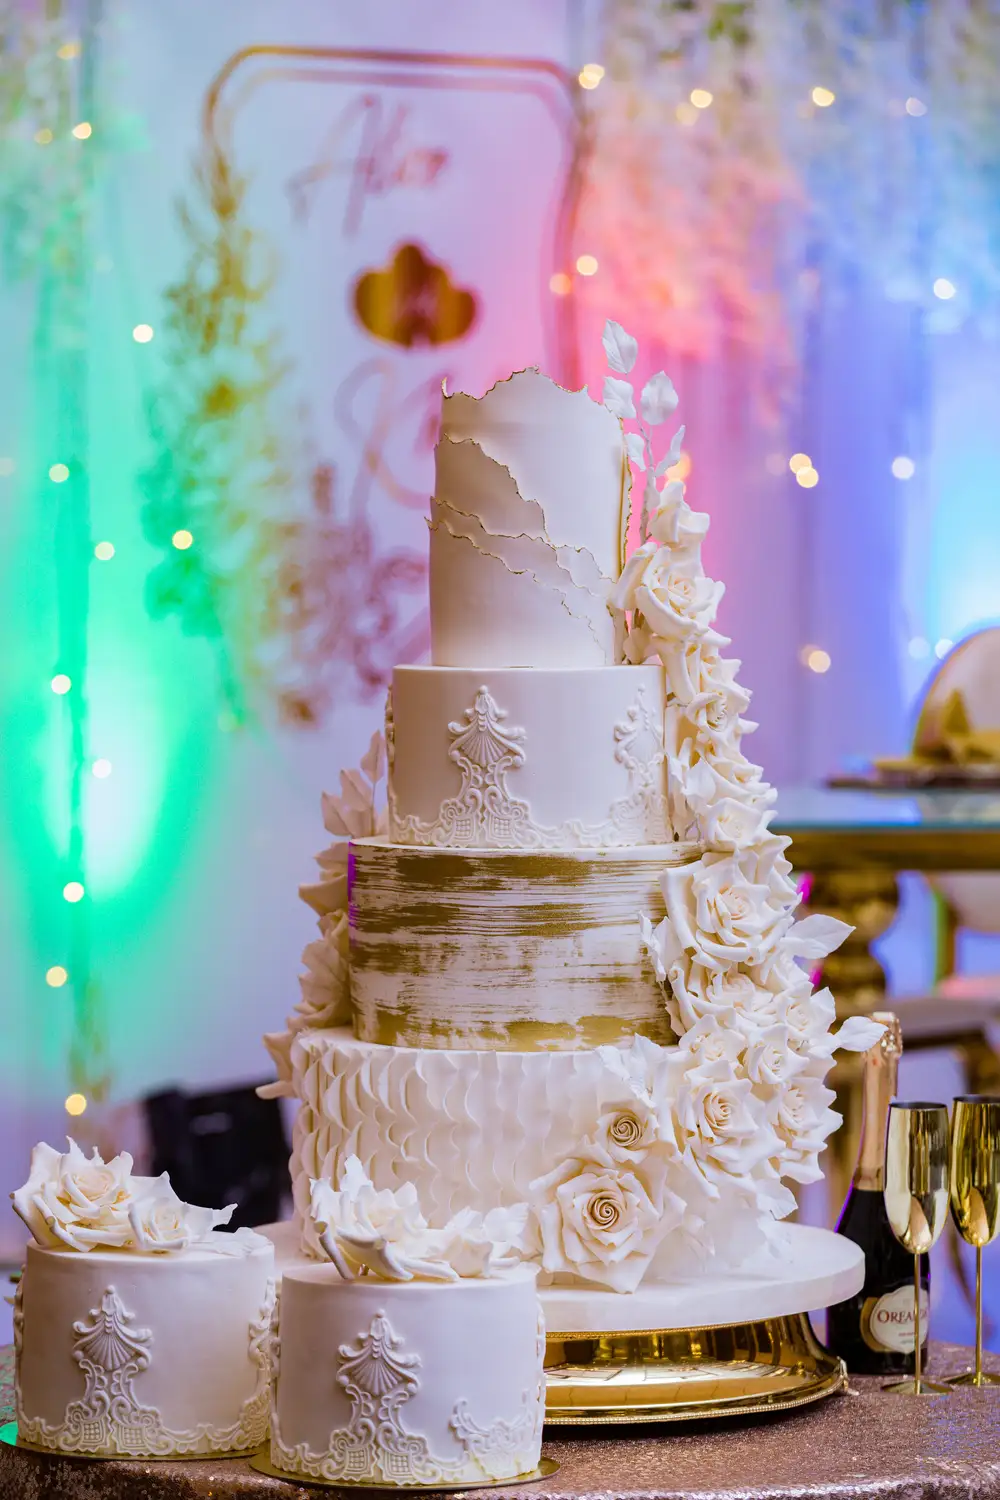 Creamy wedding cake